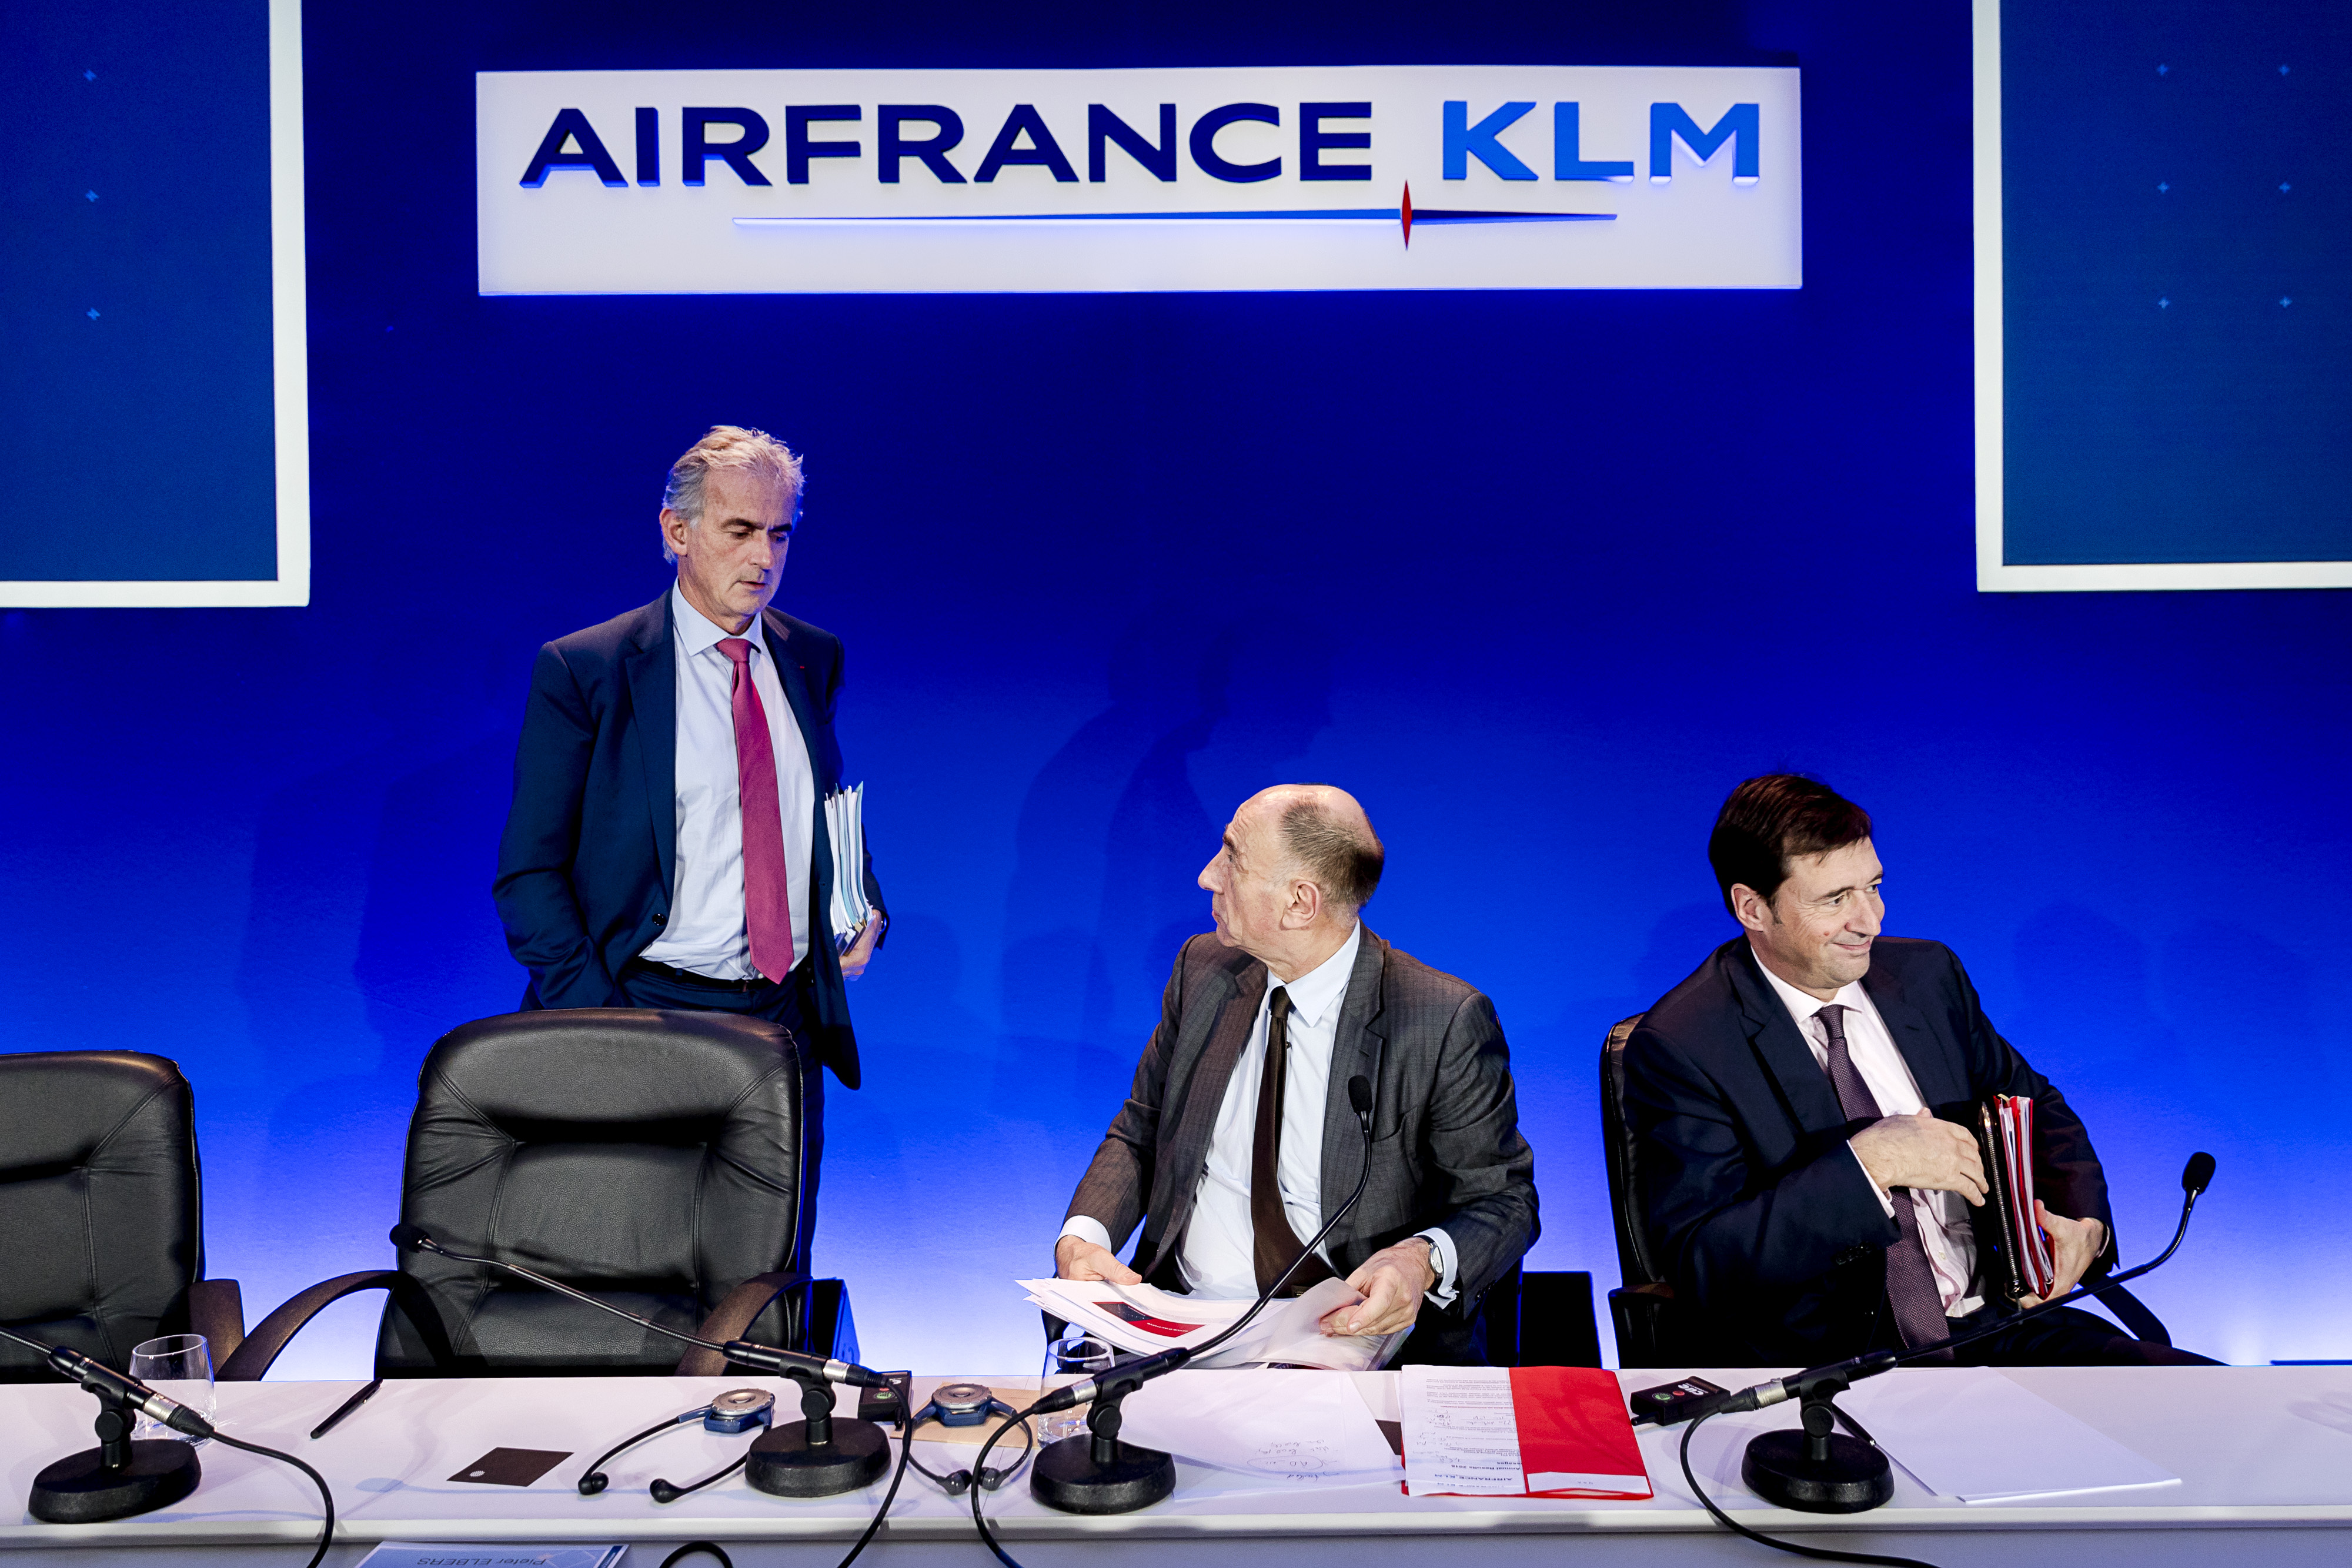 2017-02-16 12:03:17 PARIJS - (vlnr) Frederic Gagey, CFO Air France KLM, Jean-Marc Janaillac, CEO van Air France KLM, en Franck Terner, CEO van Air France, na afloop van de persconferentie van de jaarcijfers 2016 van Air France KLM. ANP REMKO DE WAAL